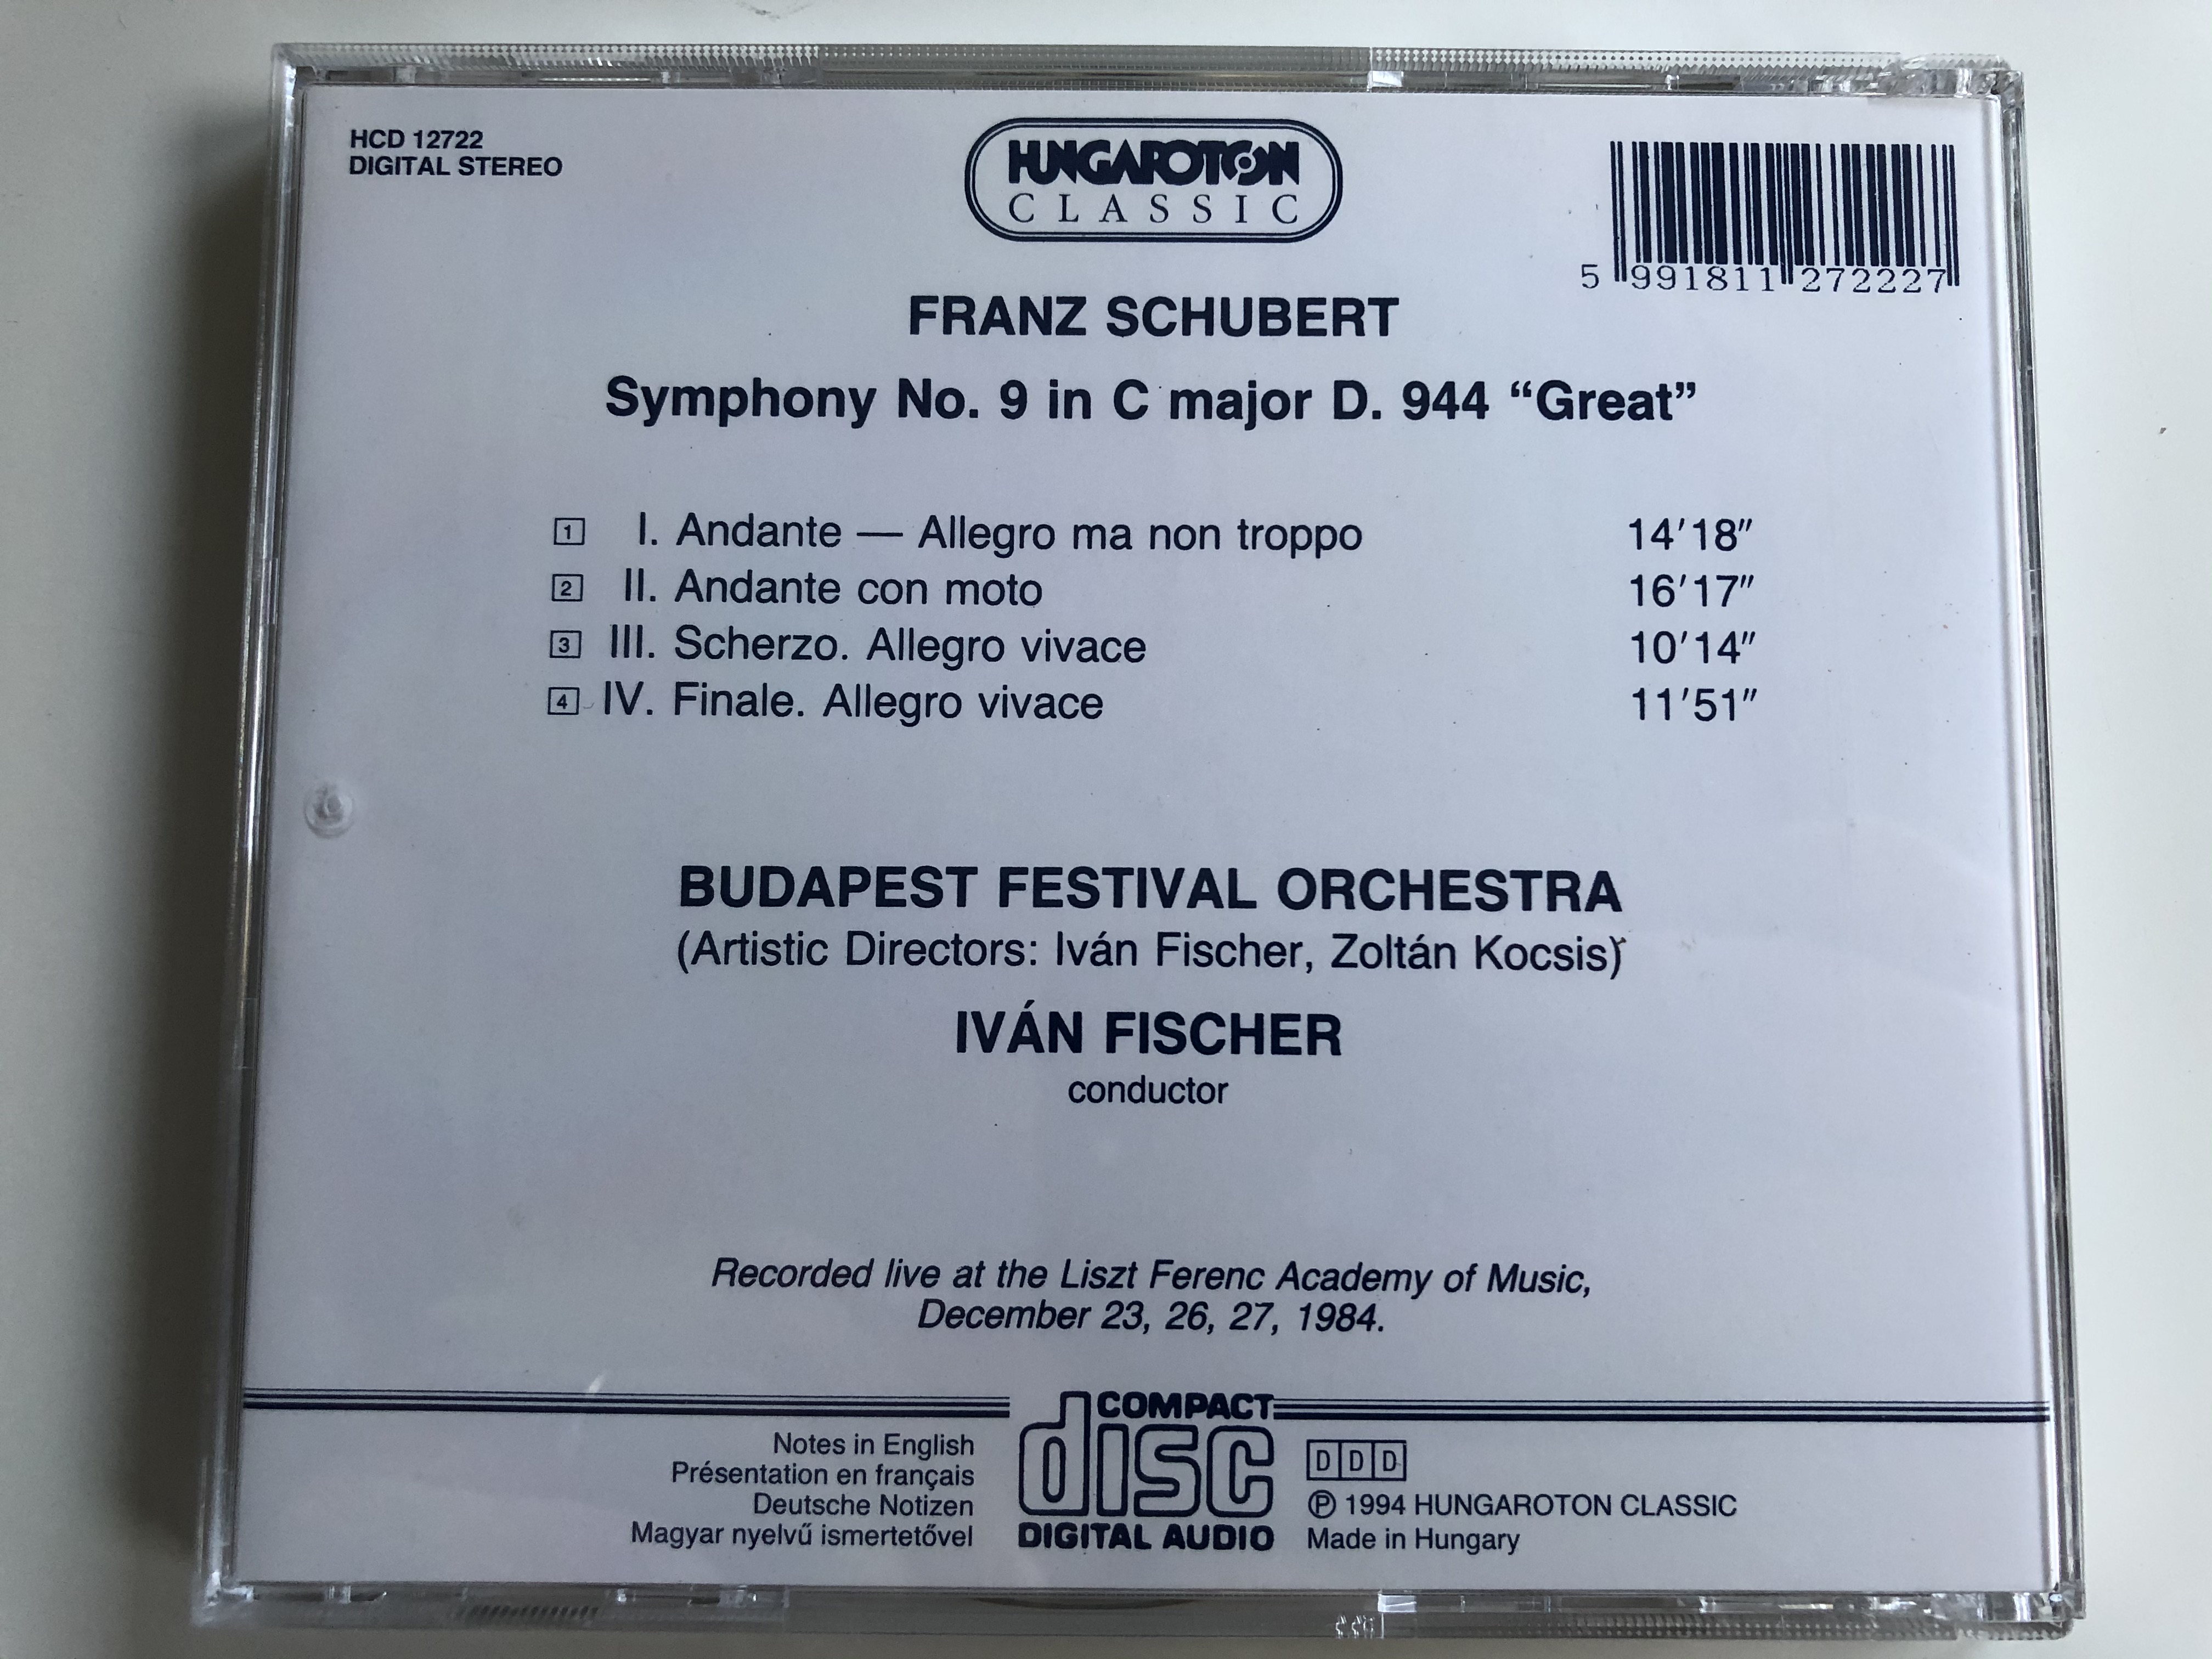 schubert-symphony-no.9-in-c-major-great-d.-944-budapest-festival-orchestra-iv-n-fischer-hungaroton-audio-cd-1994-stereo-hcd-12722-2-8-.jpg